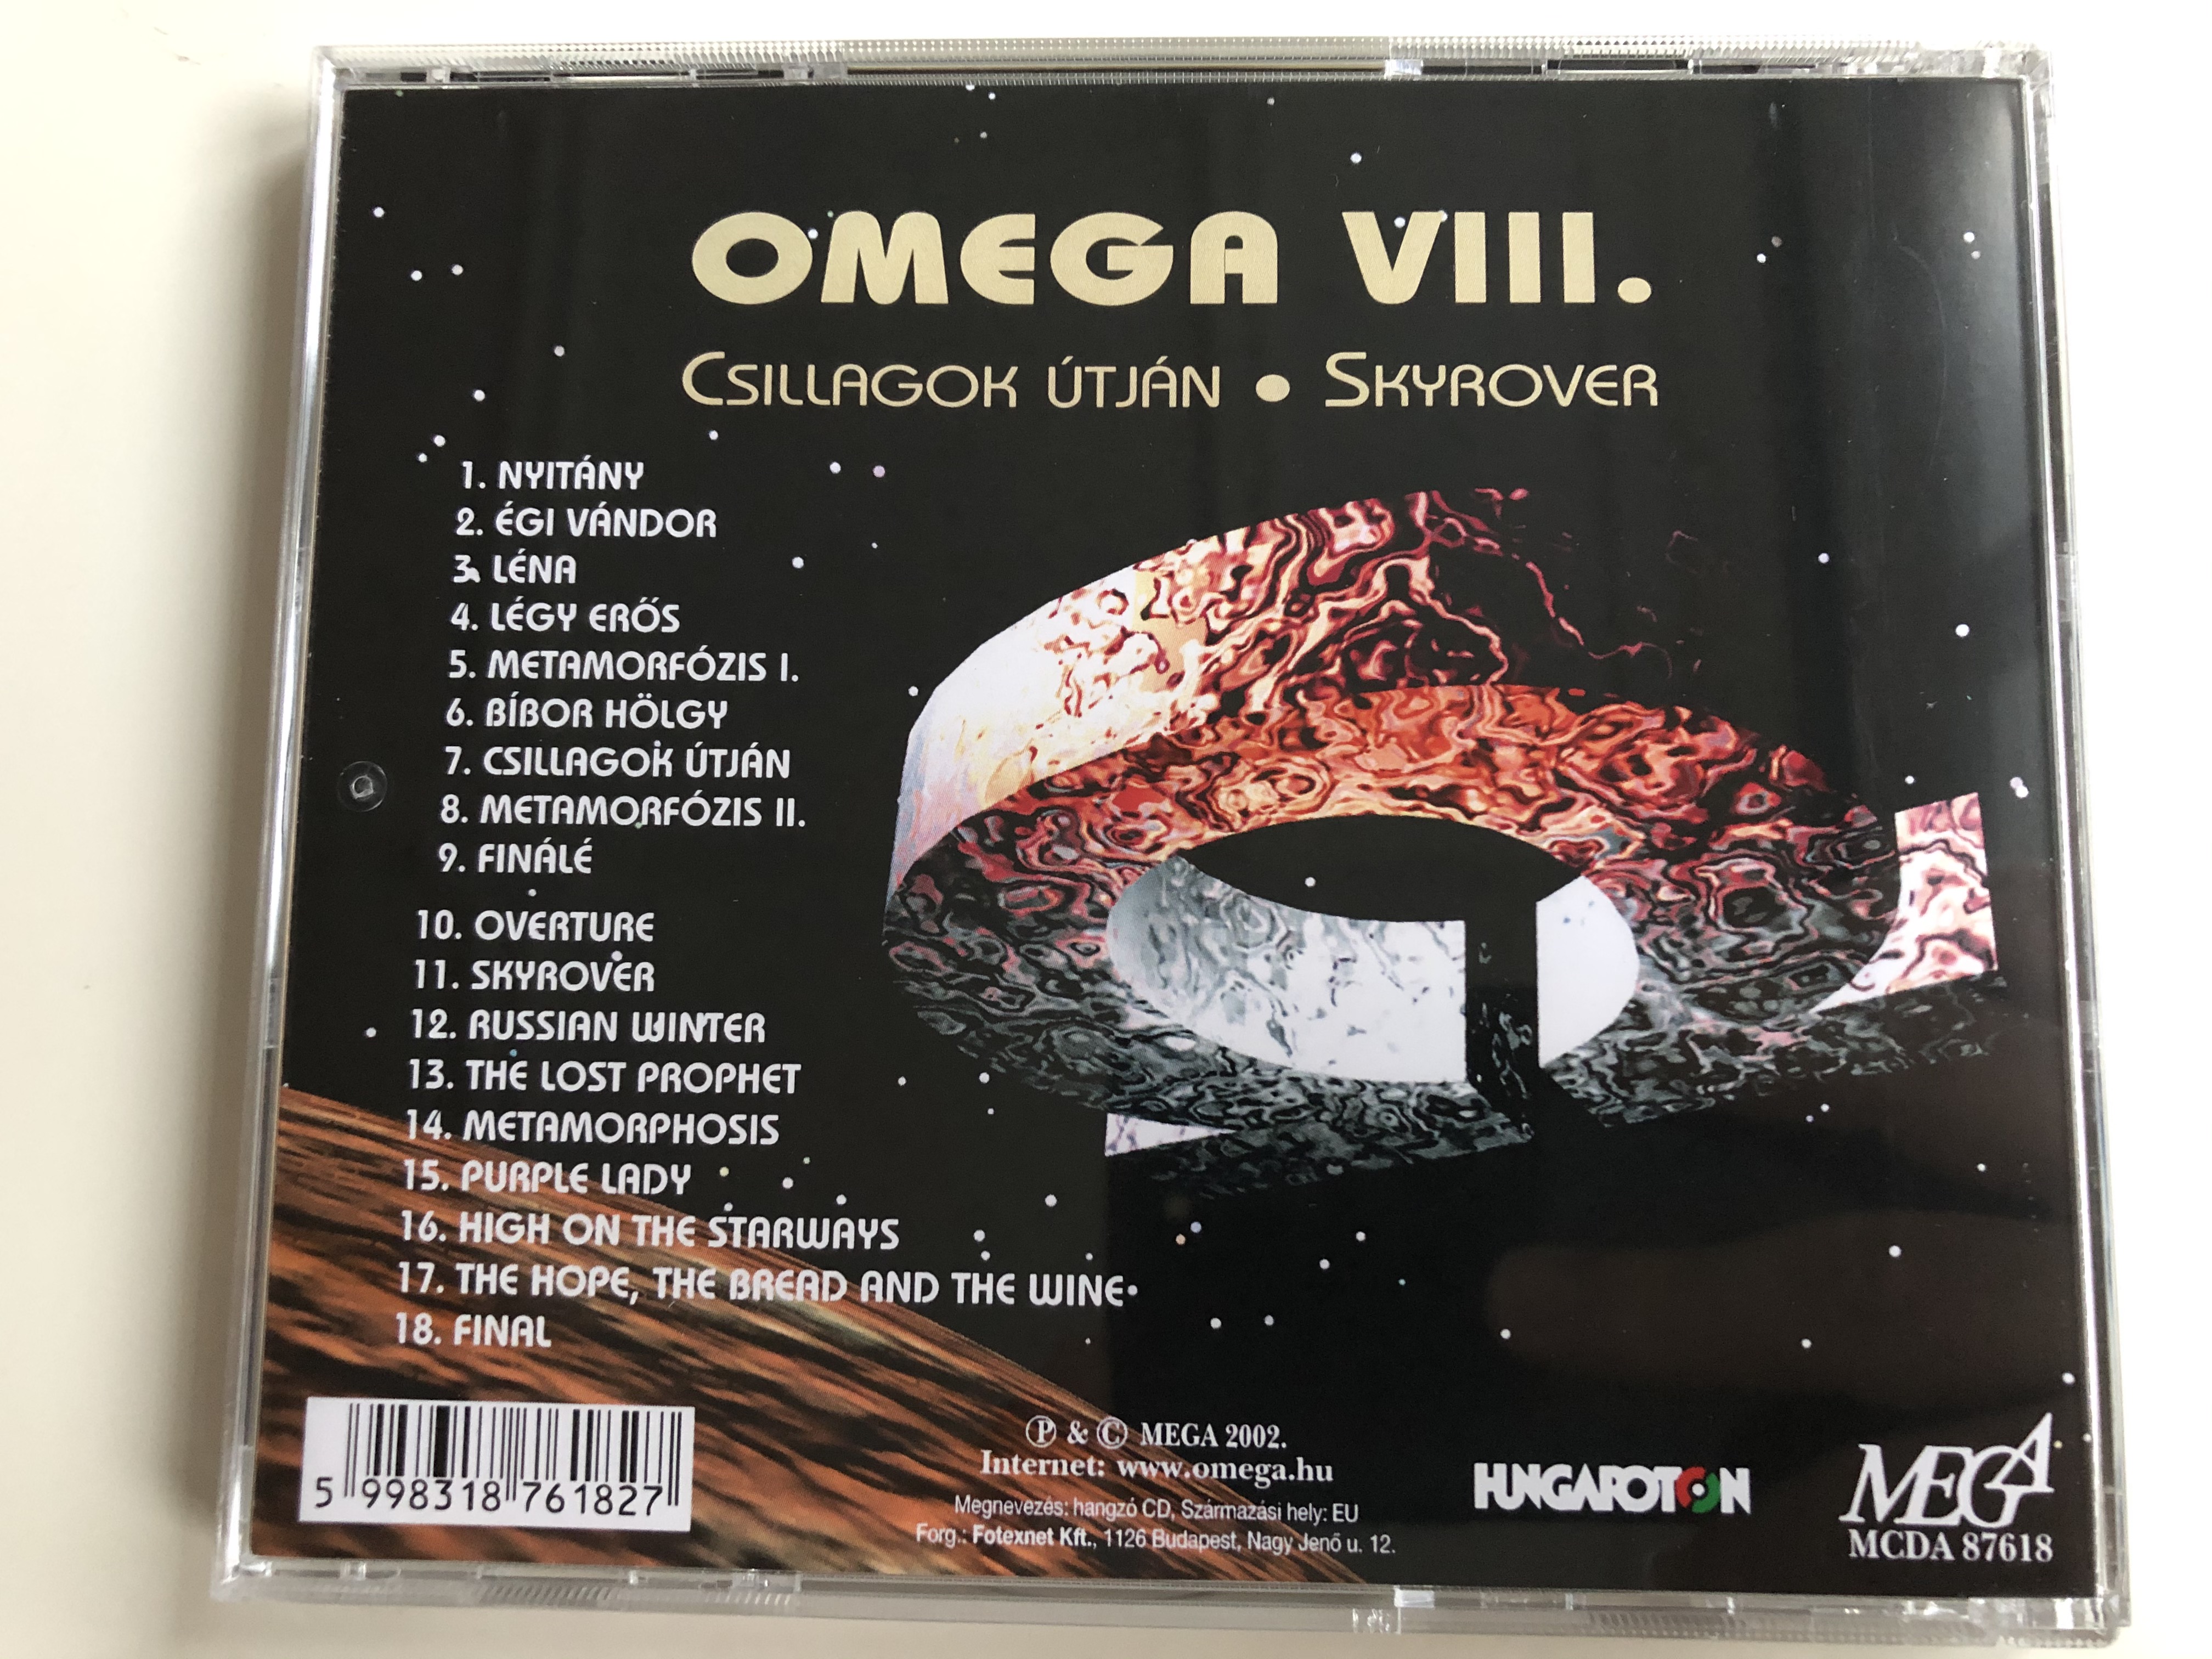 omega-csillagok-tj-n-skyrover-omega-viii.-mega-audio-cd-2002-mcda-87618-9-.jpg